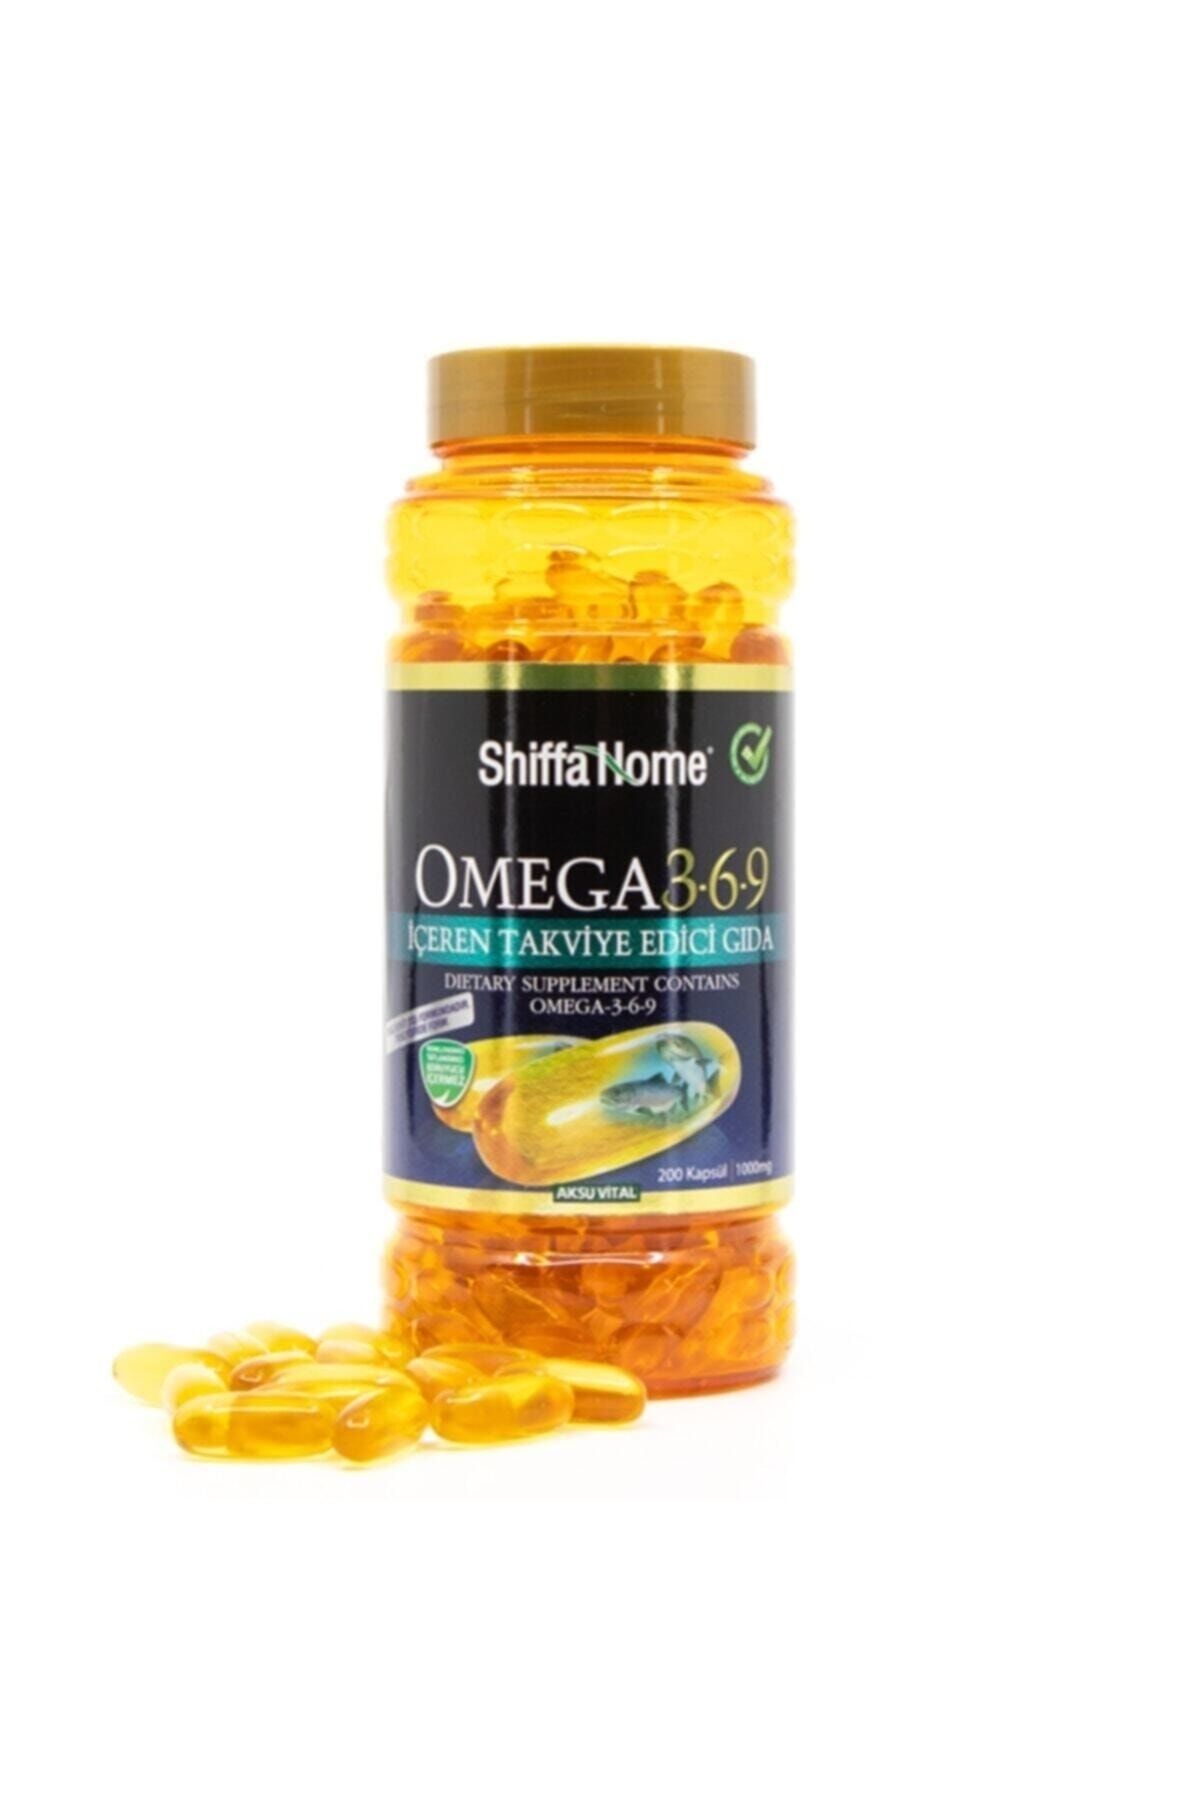 Shiffa Home Omega 3-6-9 200 Softgel X 1000 Mg